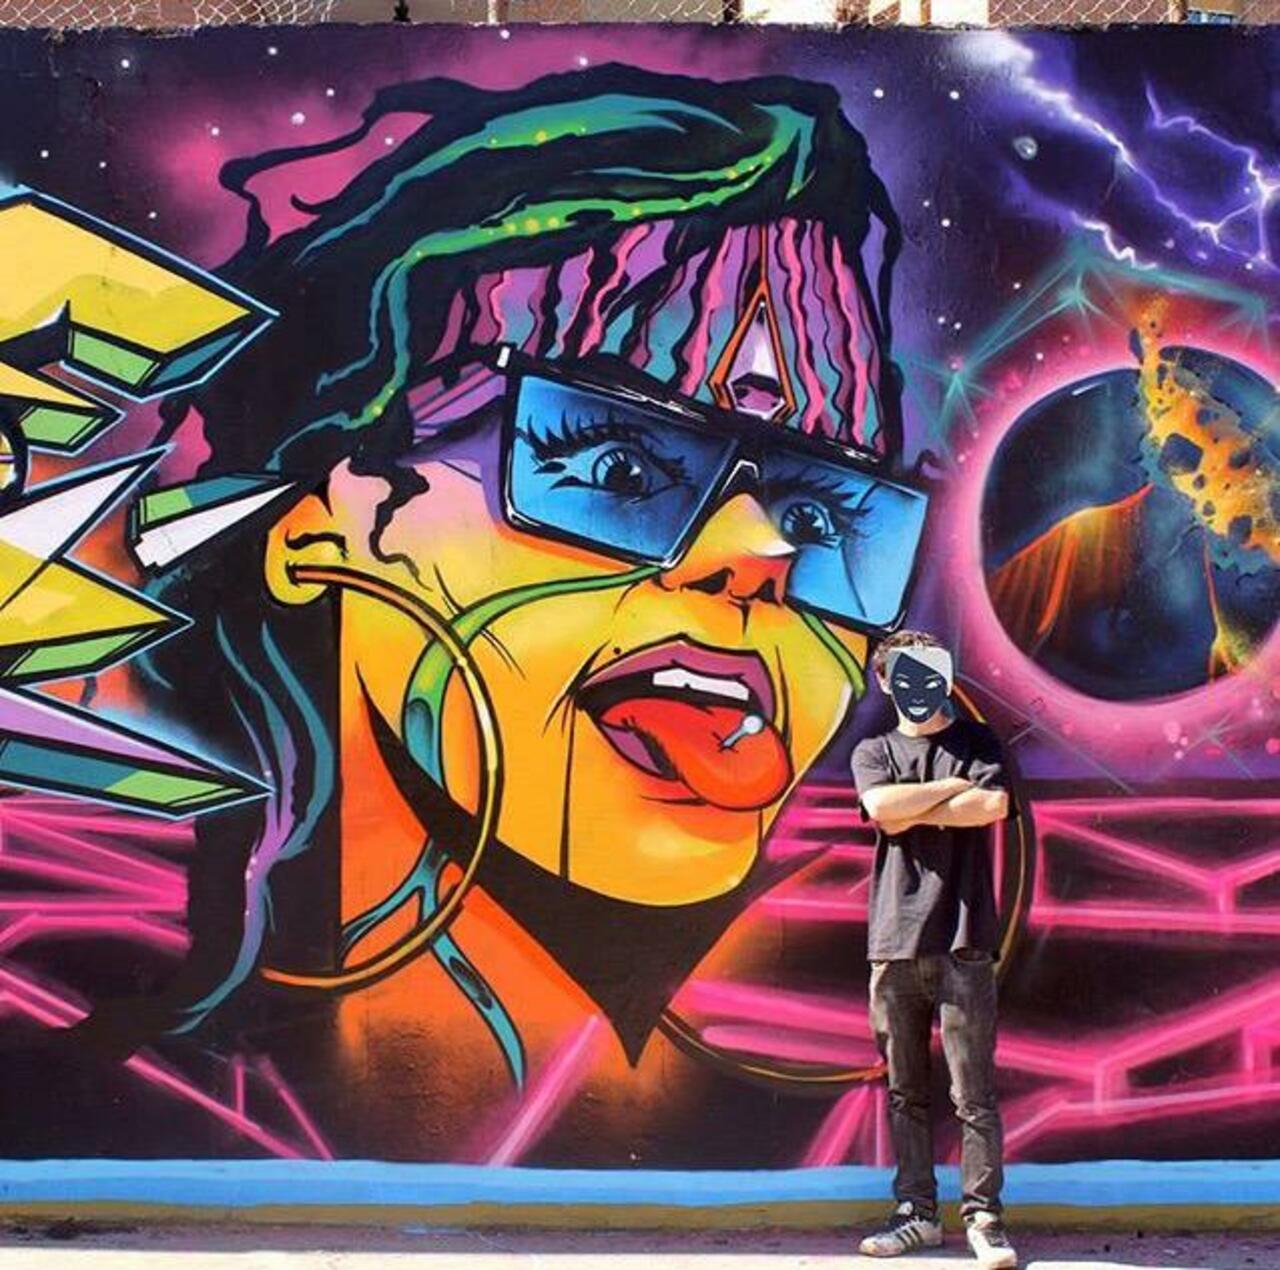 RT @Yoda3_0: Brilliant new Street Art by the artist Jaycaes

#art #graffiti #mural #streetart http://t.co/JqyKaADWtL